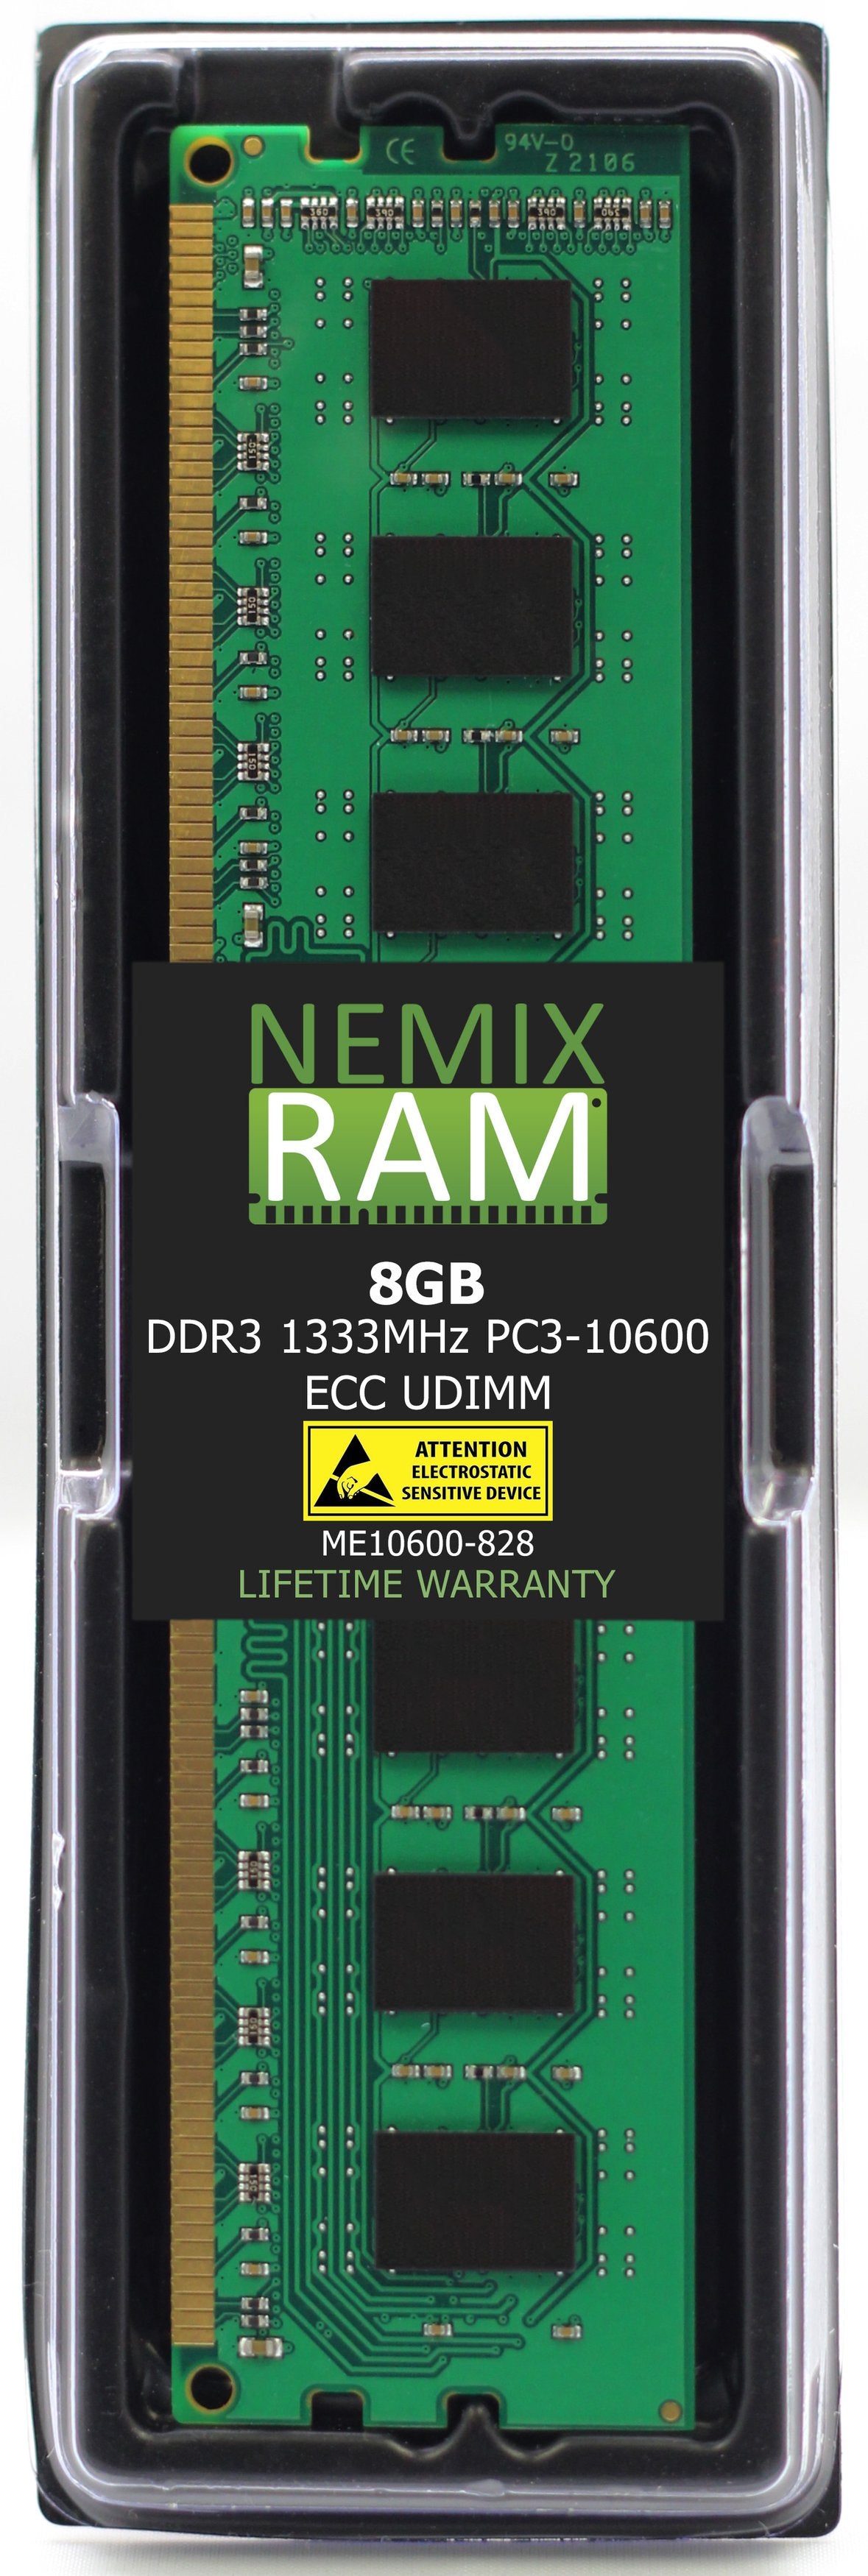 8GB DDR3 1333MHZ PC3-10600 ECC UDIMM Compatible with Supermicro MEM-DR380L-SL02-EU13